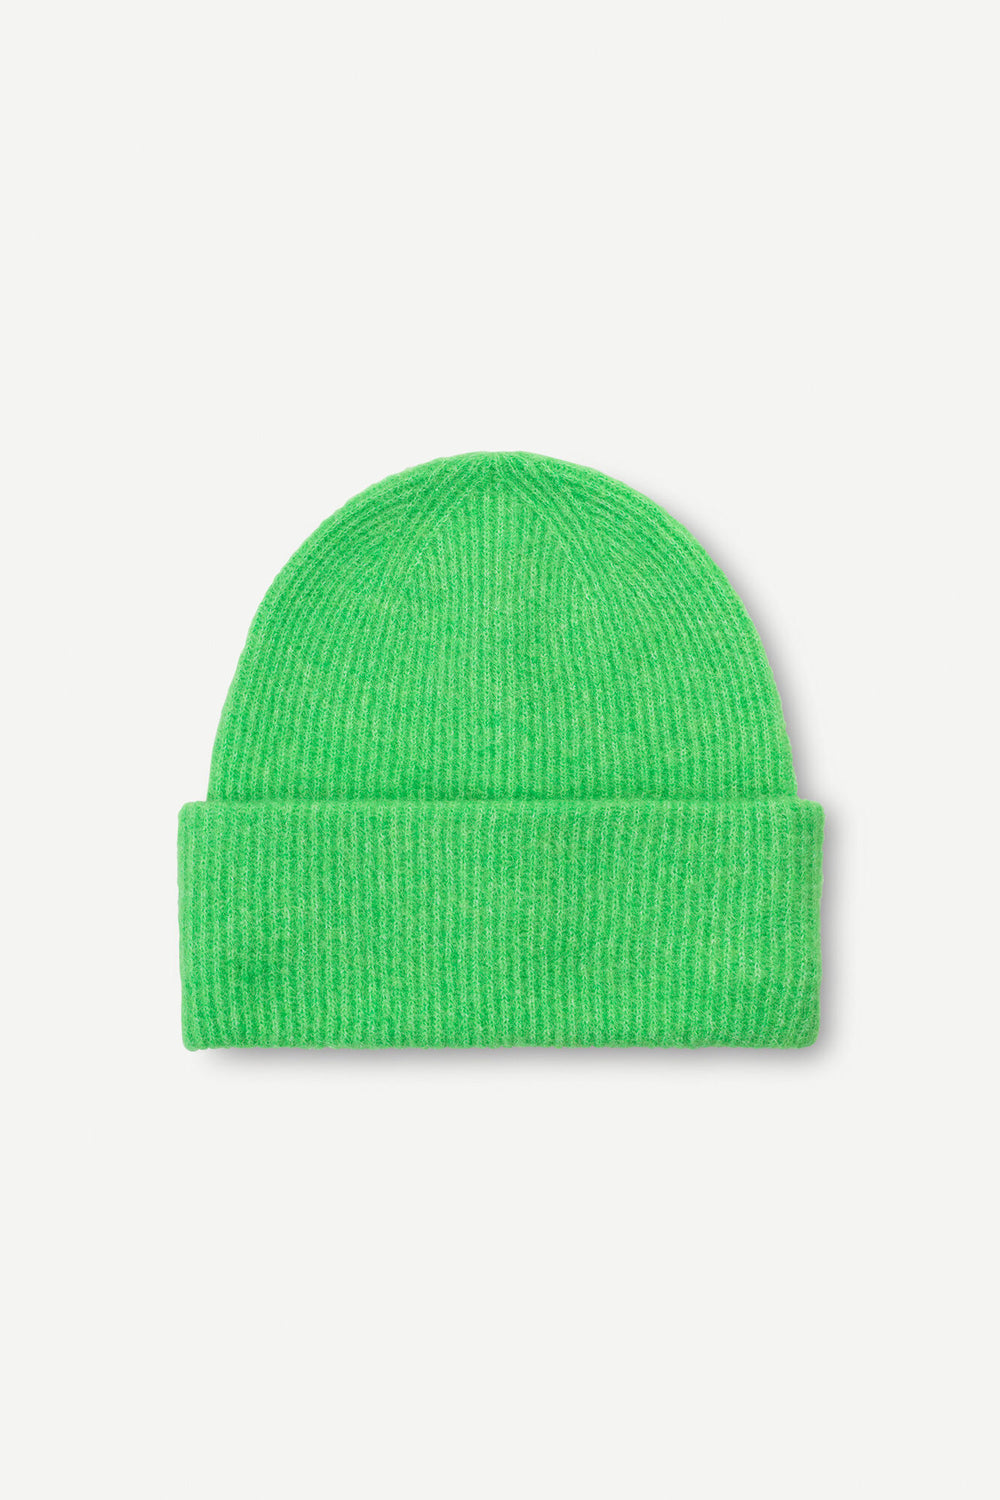 Nor Hat - Vibrant Green